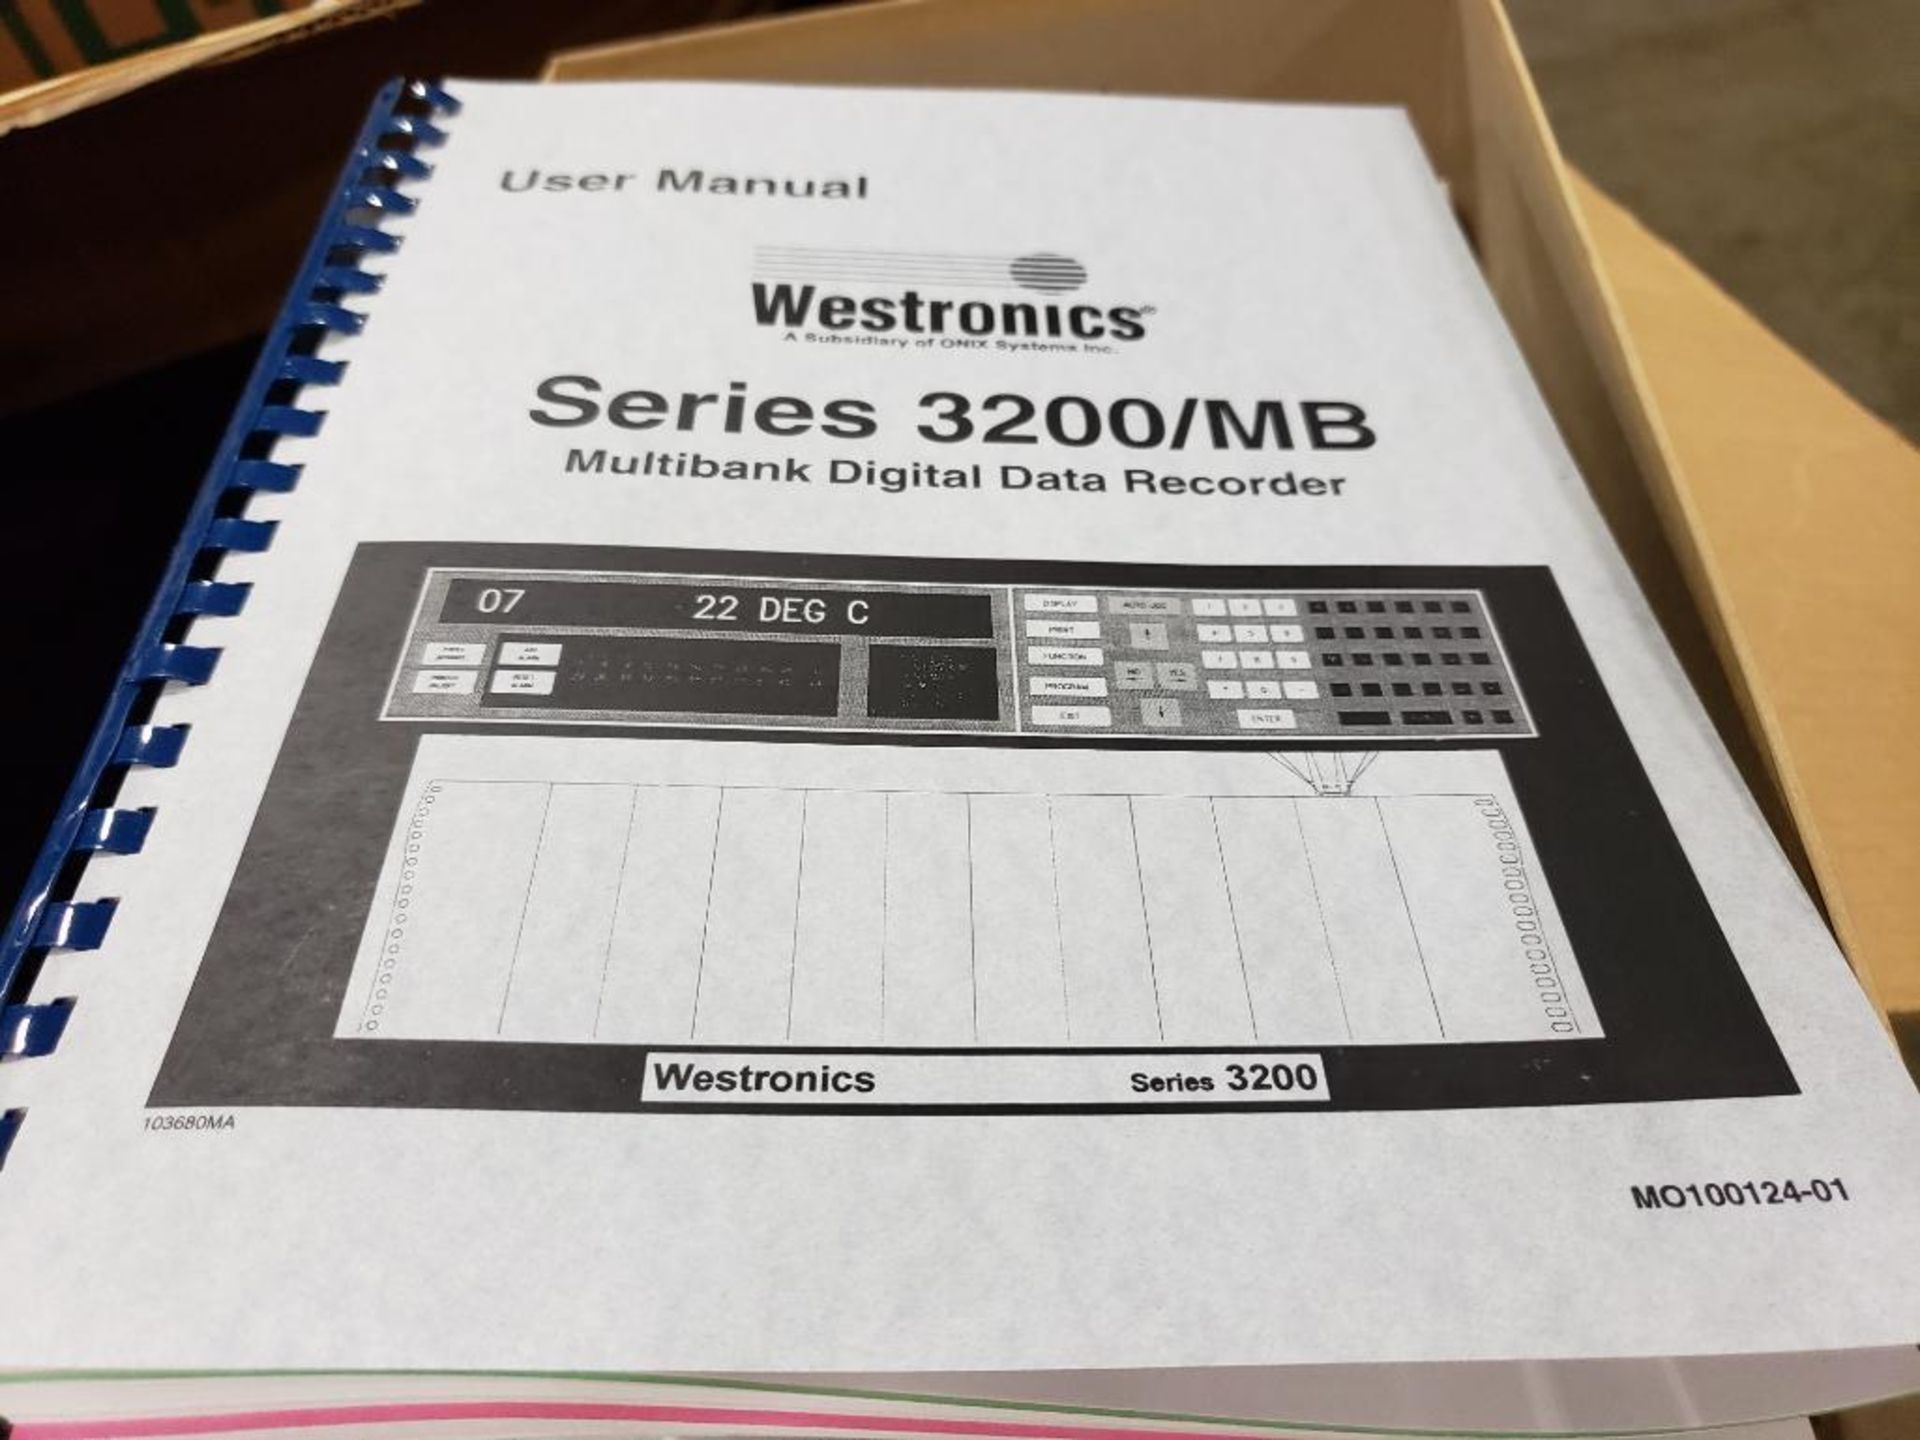 Westronics Series 3200/MB Multibank Digital data recorder. New in box. - Image 5 of 7